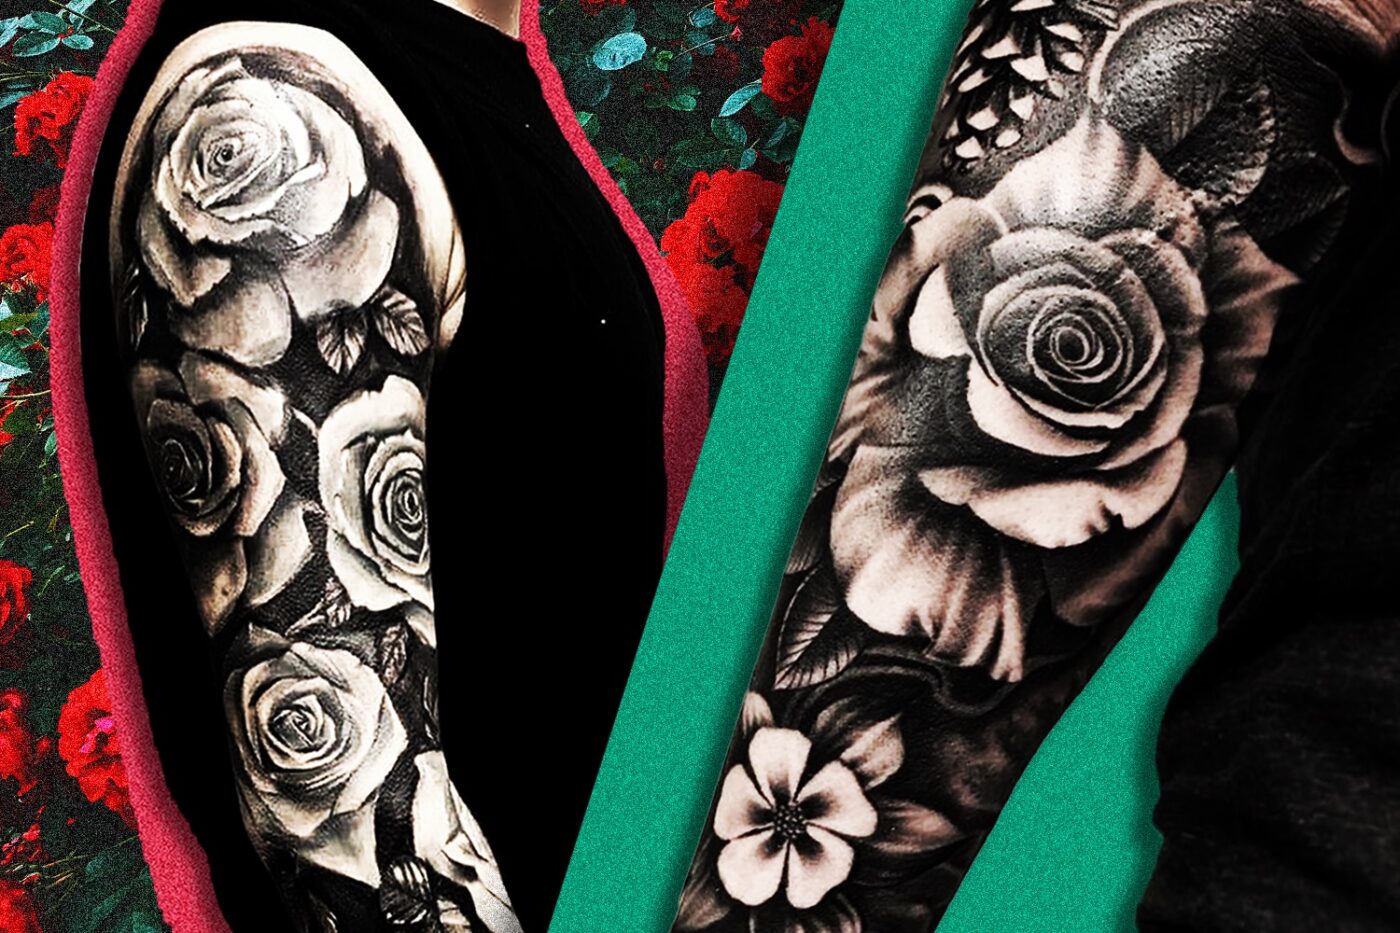 35 Rose Tattoos For Men